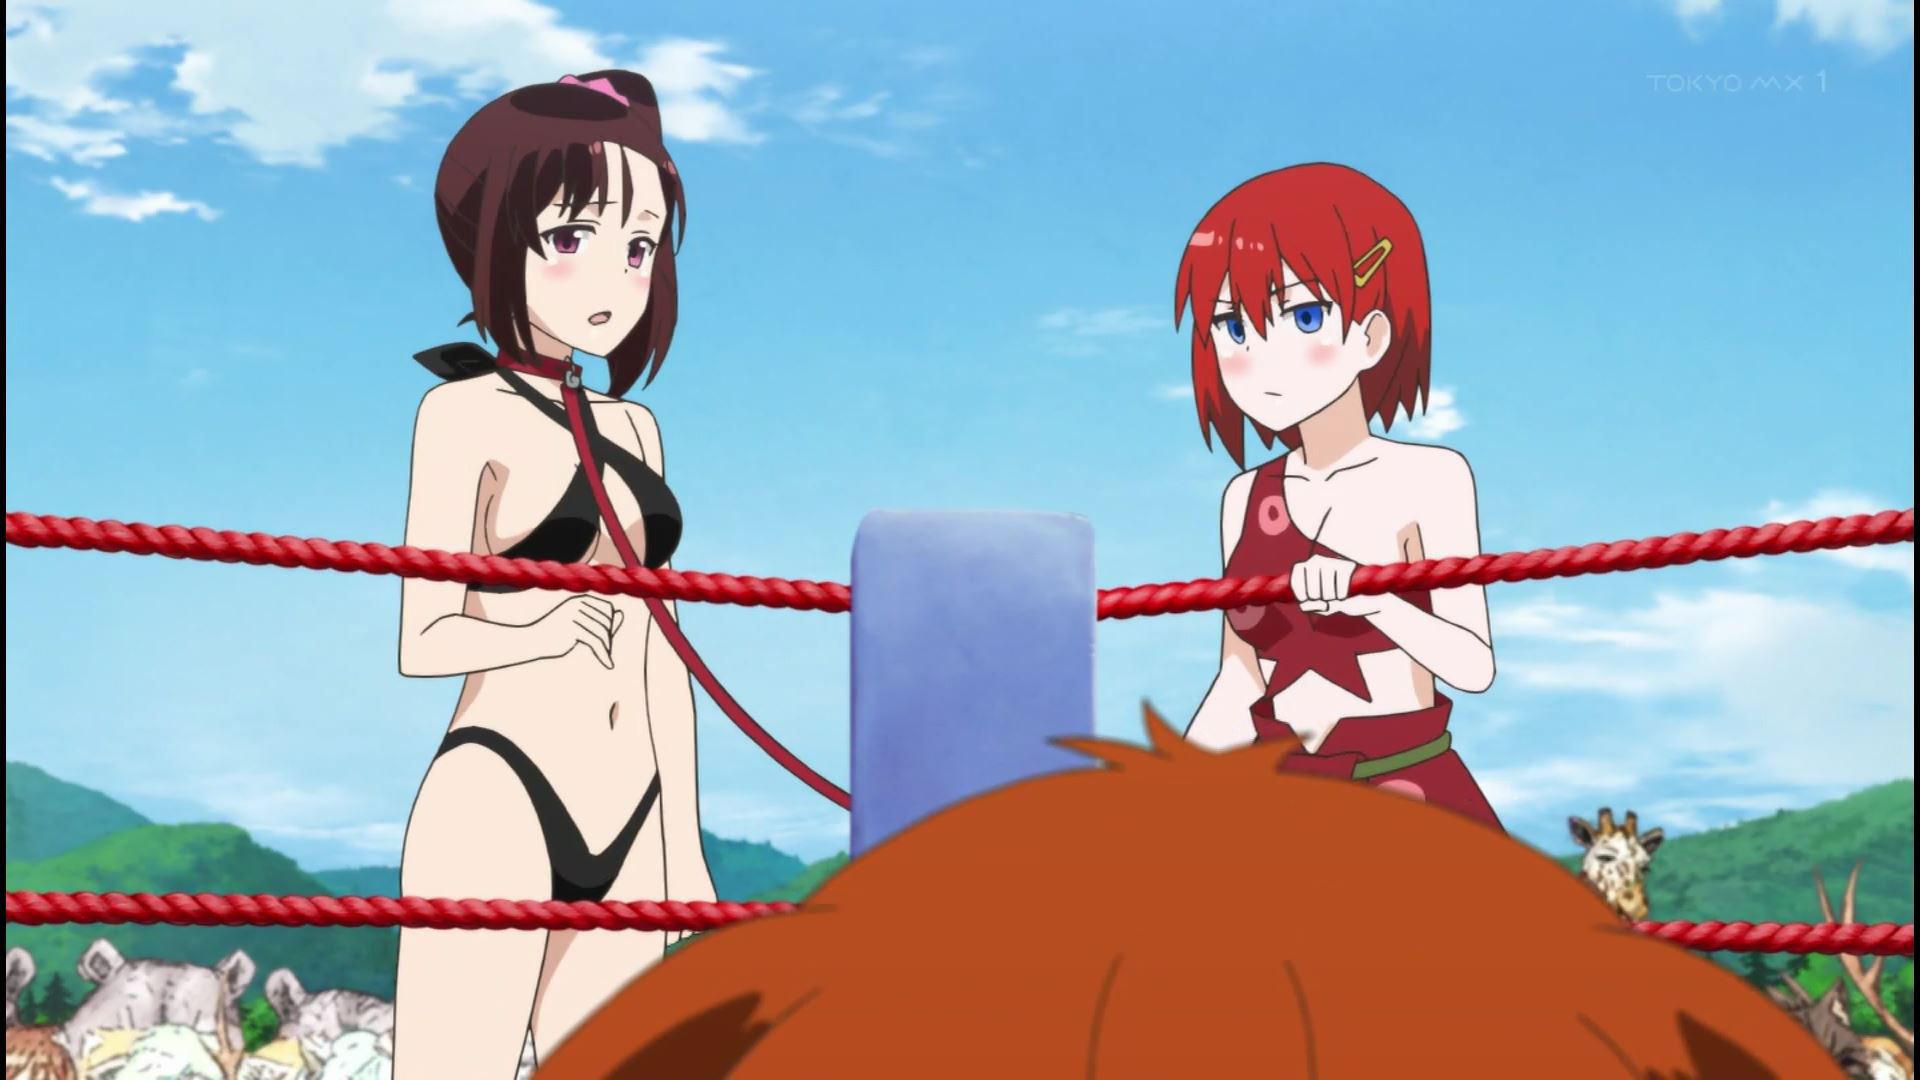 Anime [Shimarenuse] Seaton Gakuen] scene that girls become insanely erotic costumes in episode 12 13